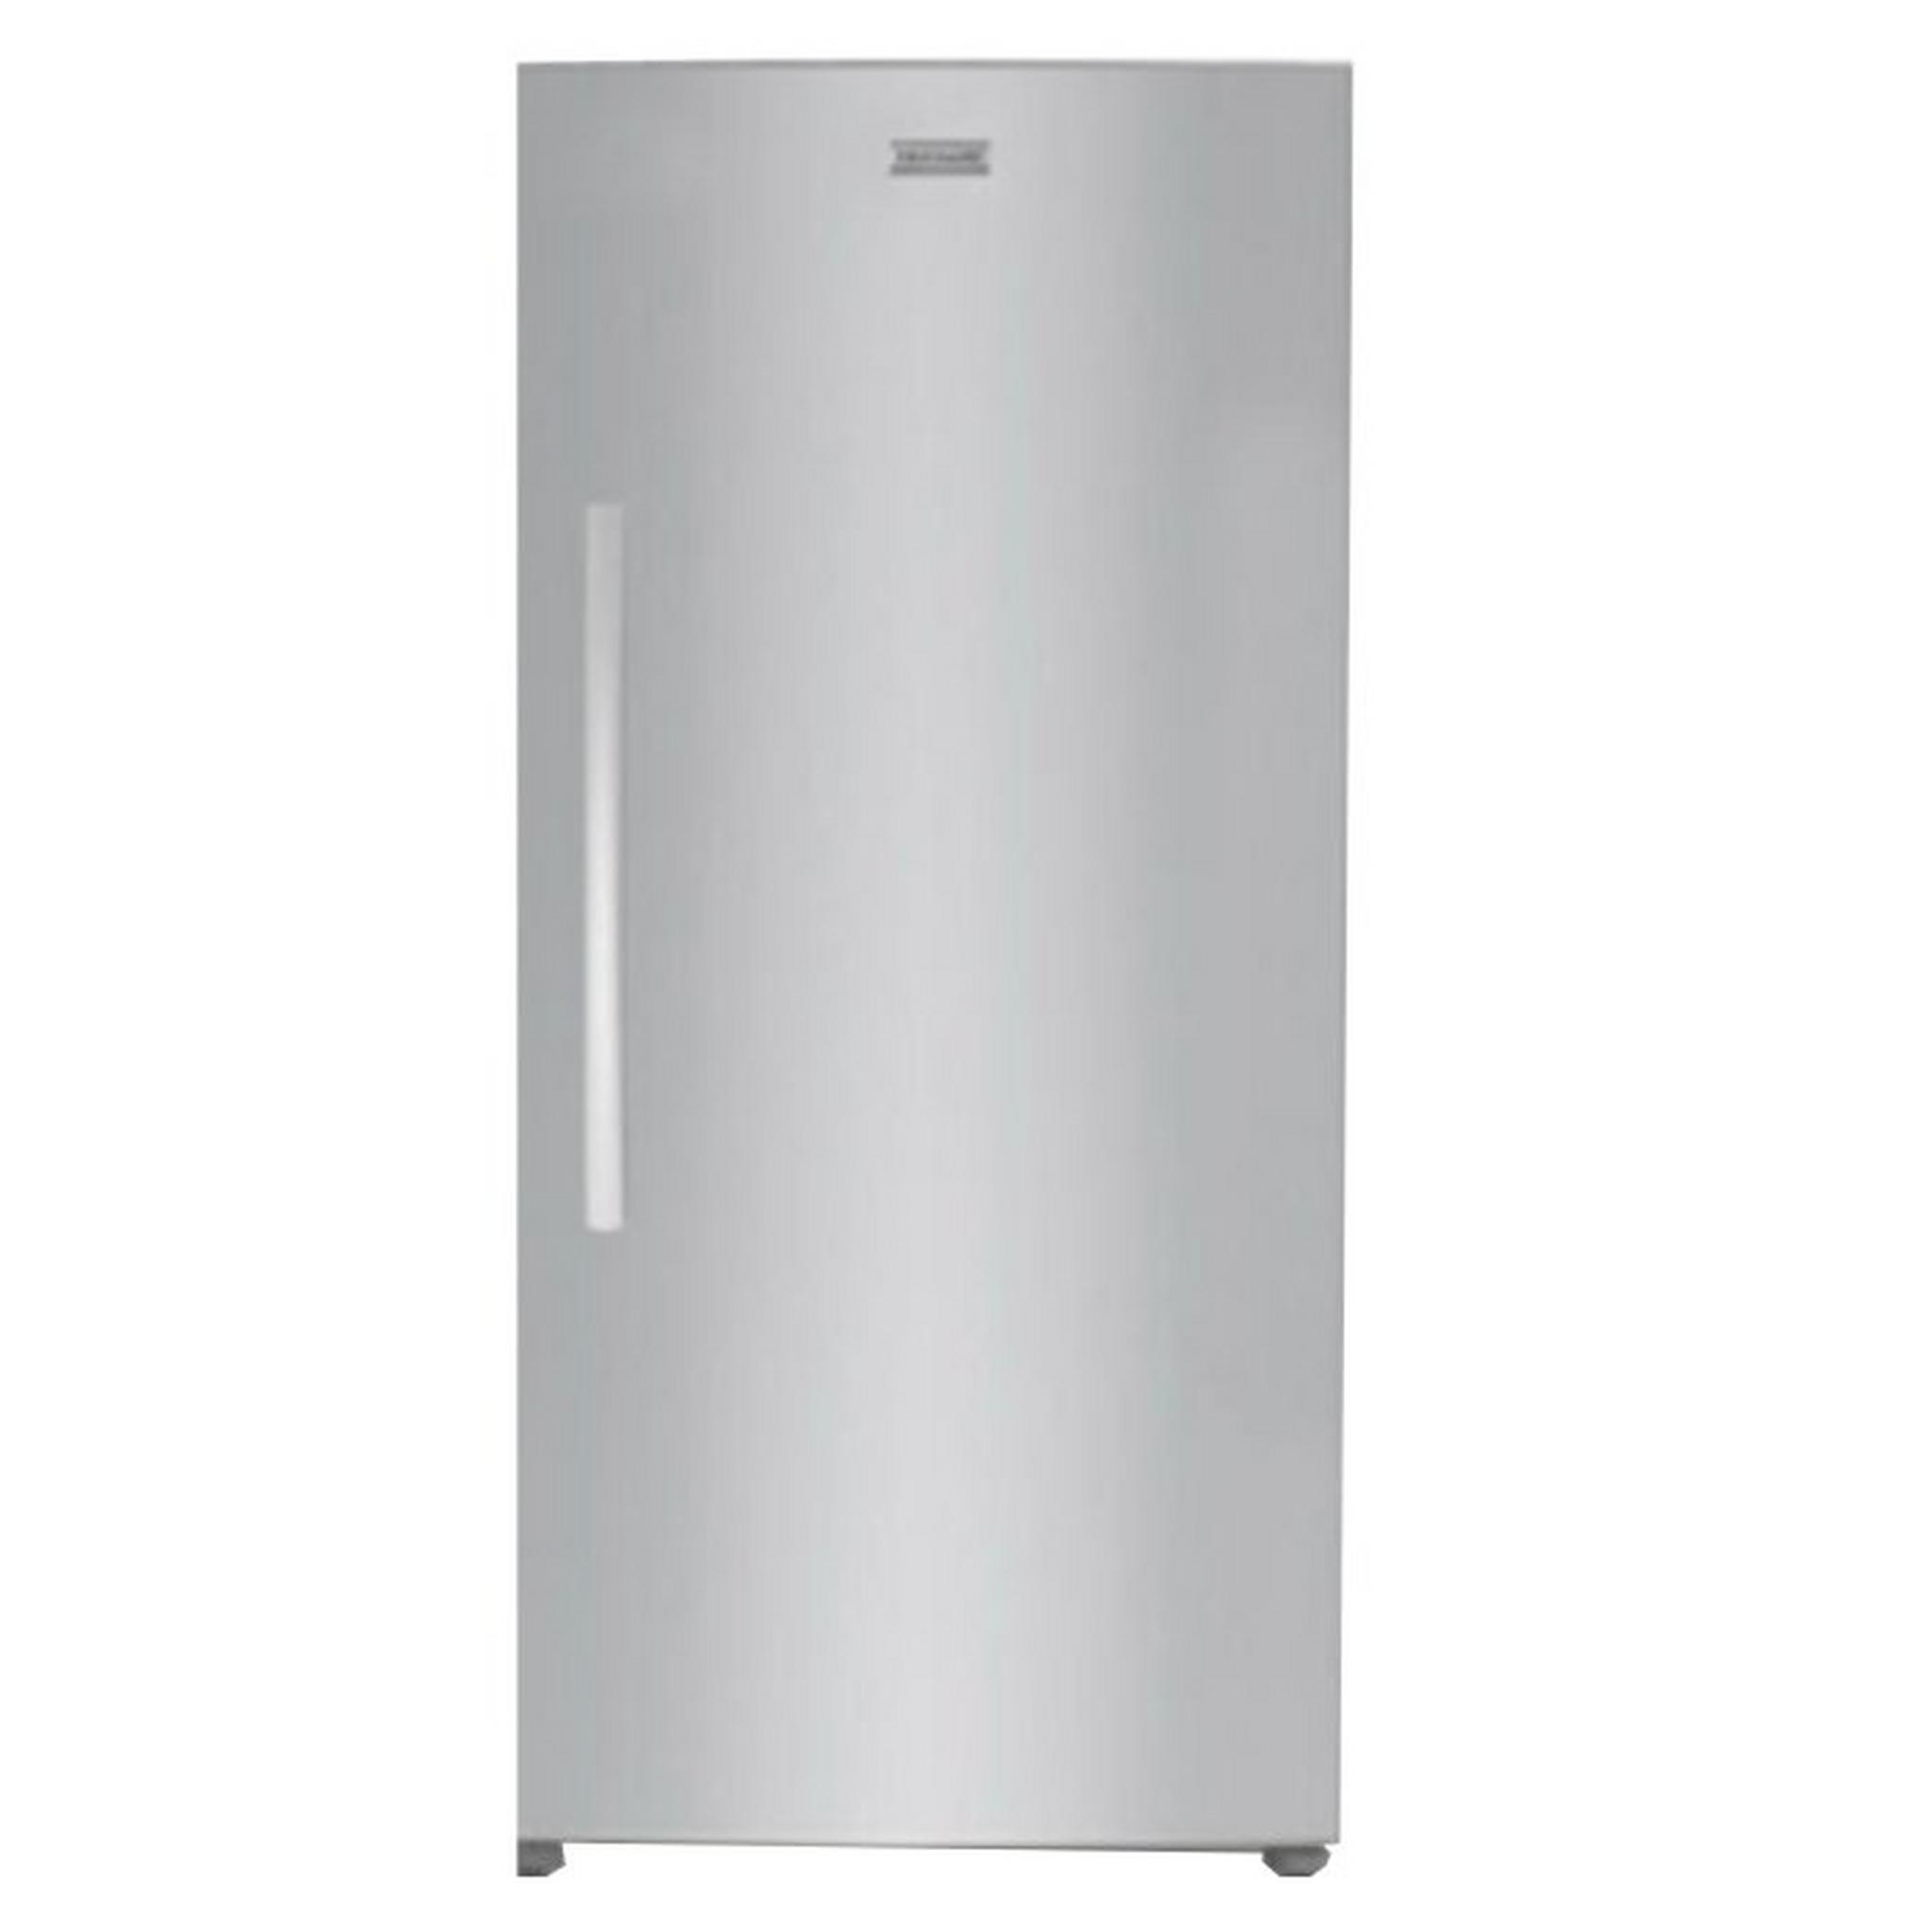 Frigidaire Refrigerator Single Door 20 Cft + Frigidaire 10kg Front Load Washing Machine